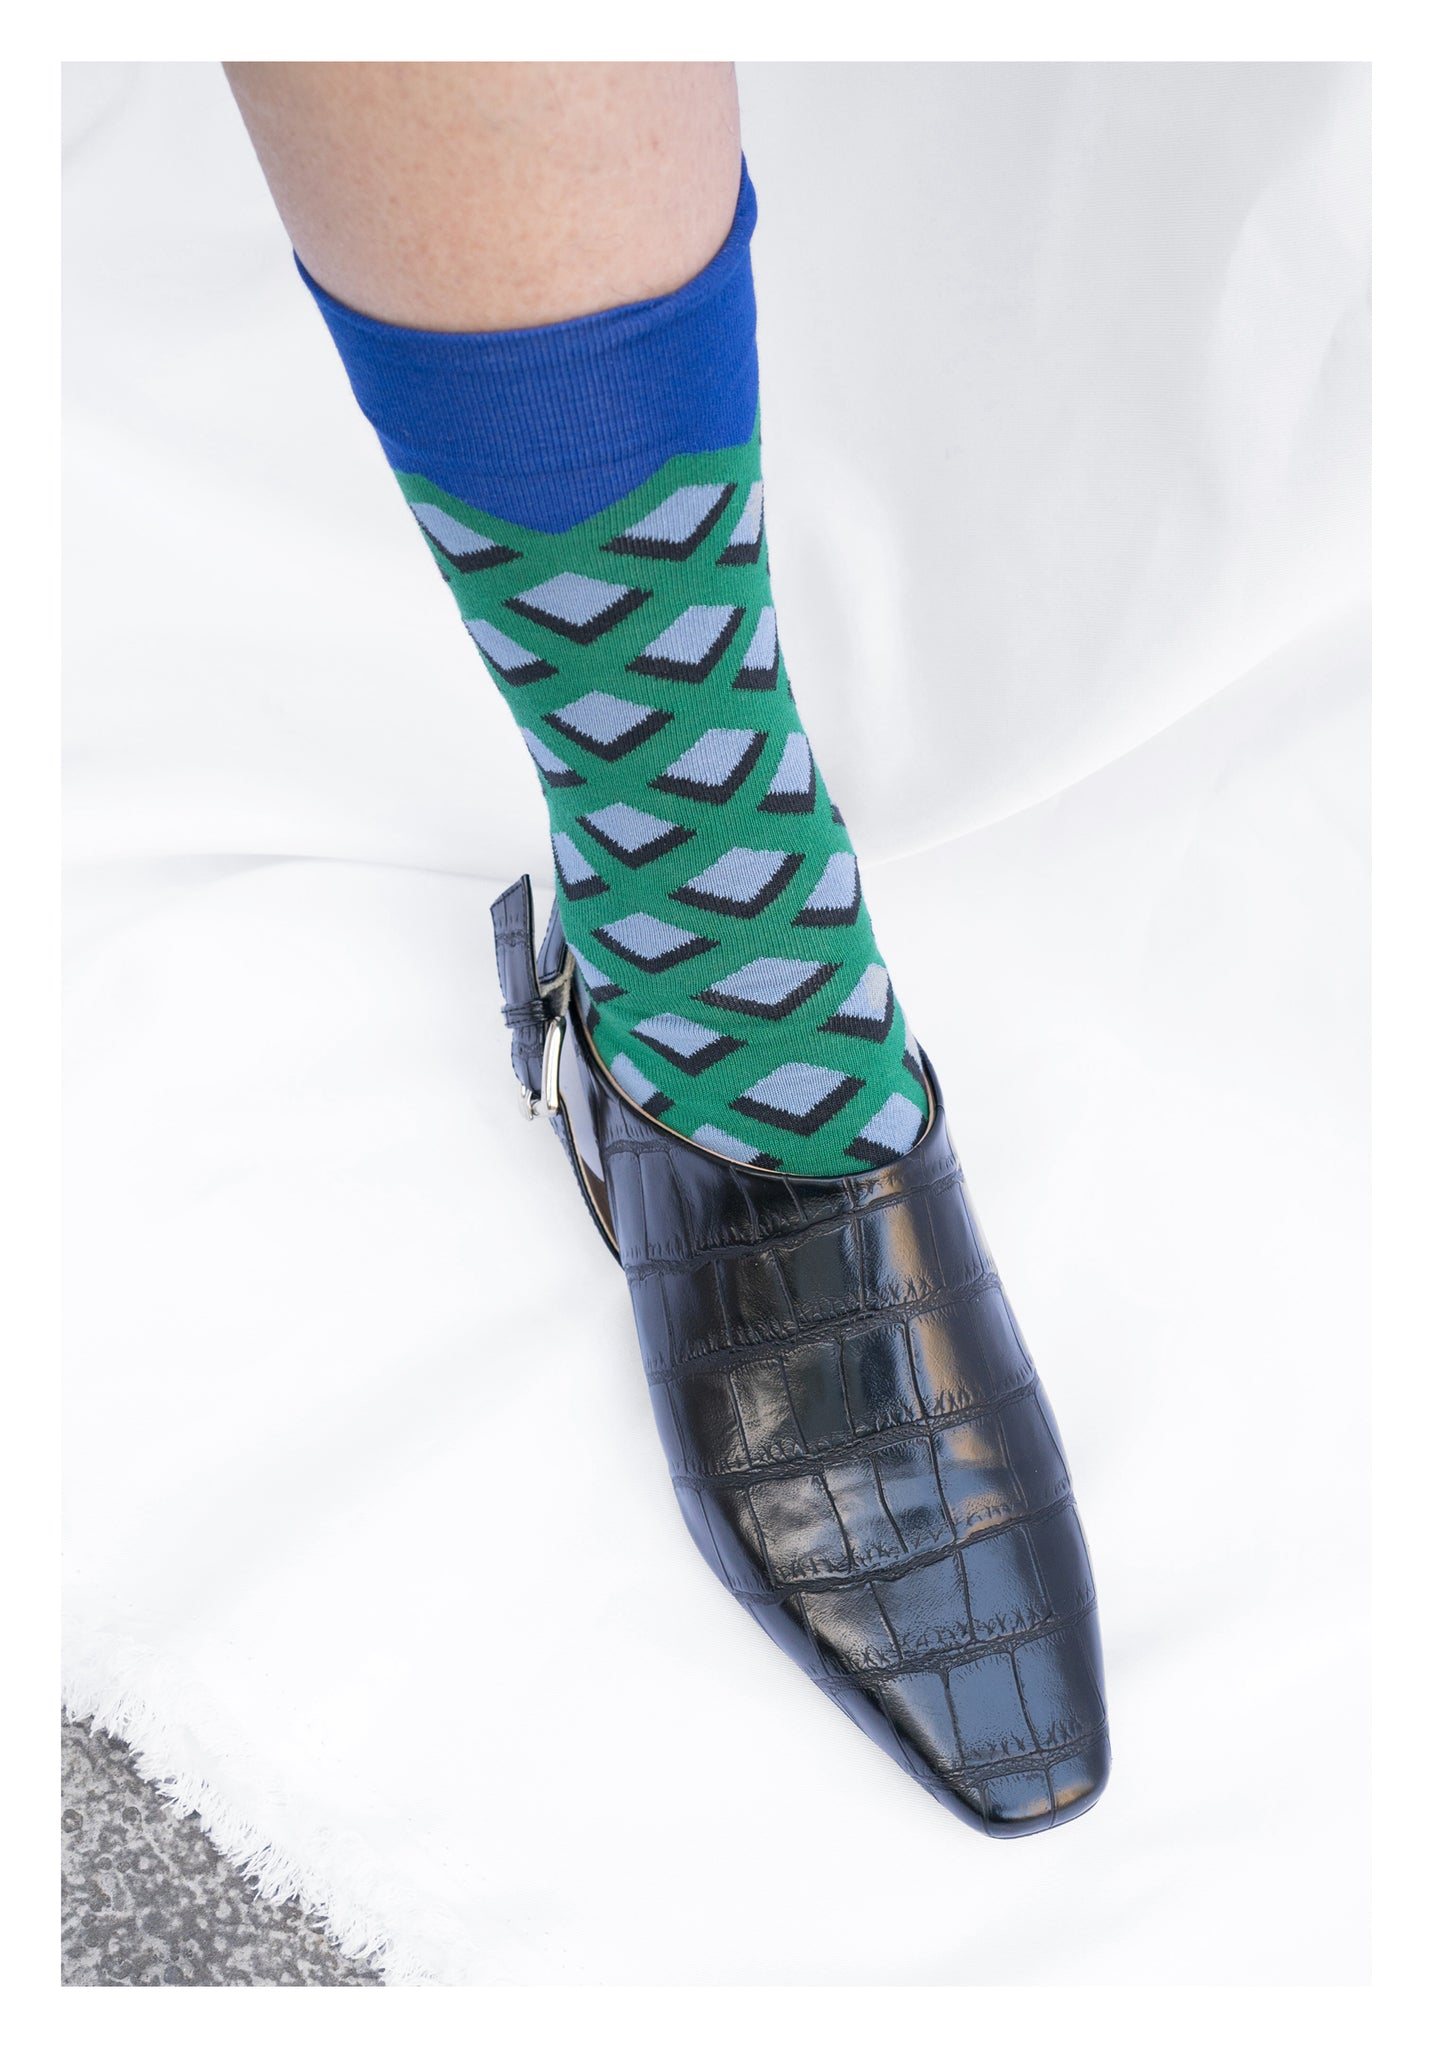 Argyle Pattern Socks Emerald - whoami